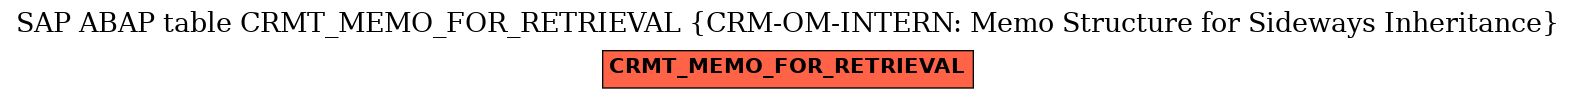 E-R Diagram for table CRMT_MEMO_FOR_RETRIEVAL (CRM-OM-INTERN: Memo Structure for Sideways Inheritance)